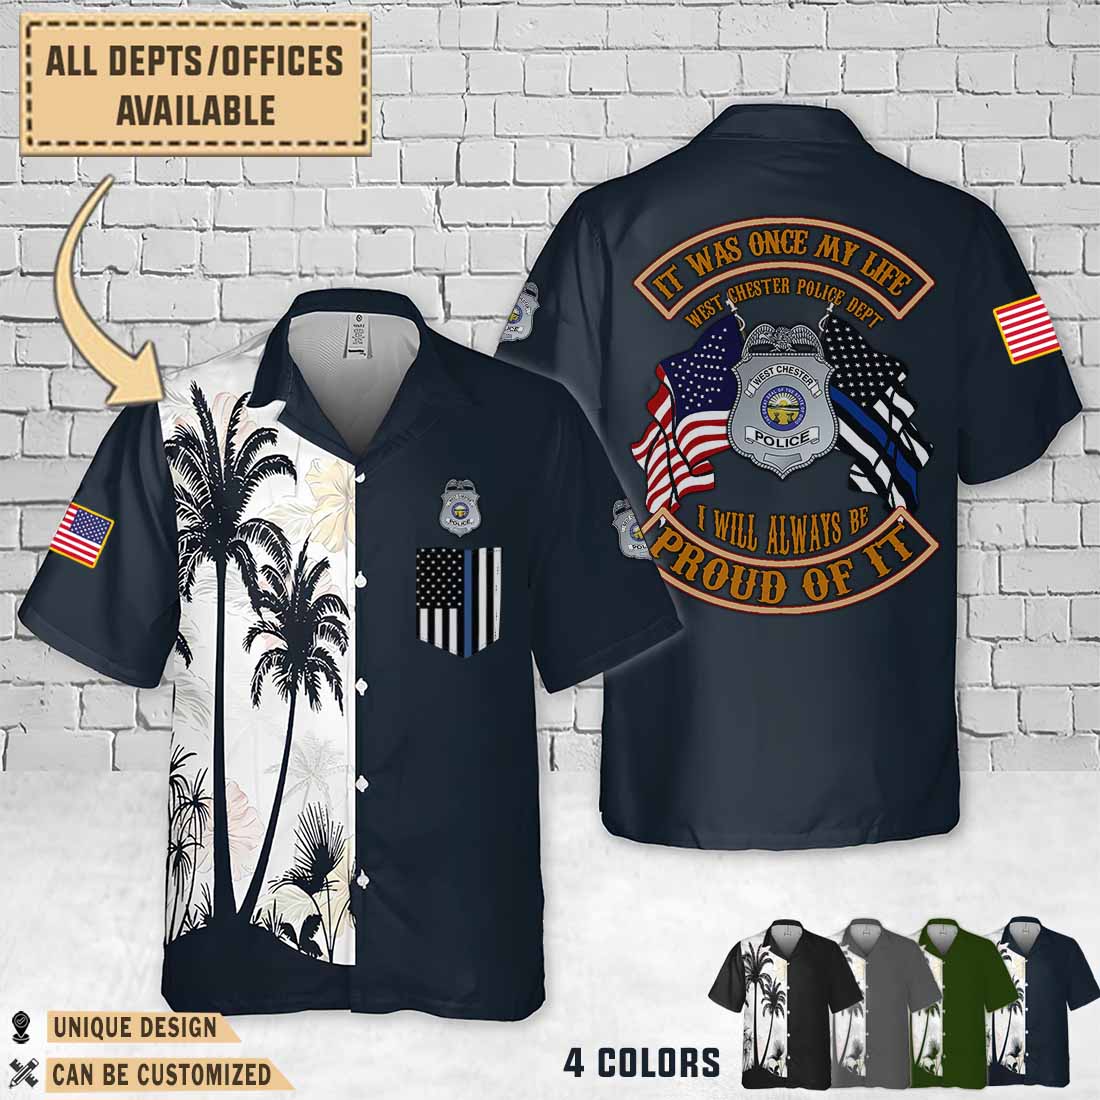 west chester police department ohdual flag hawaiian shirt 1yfsn